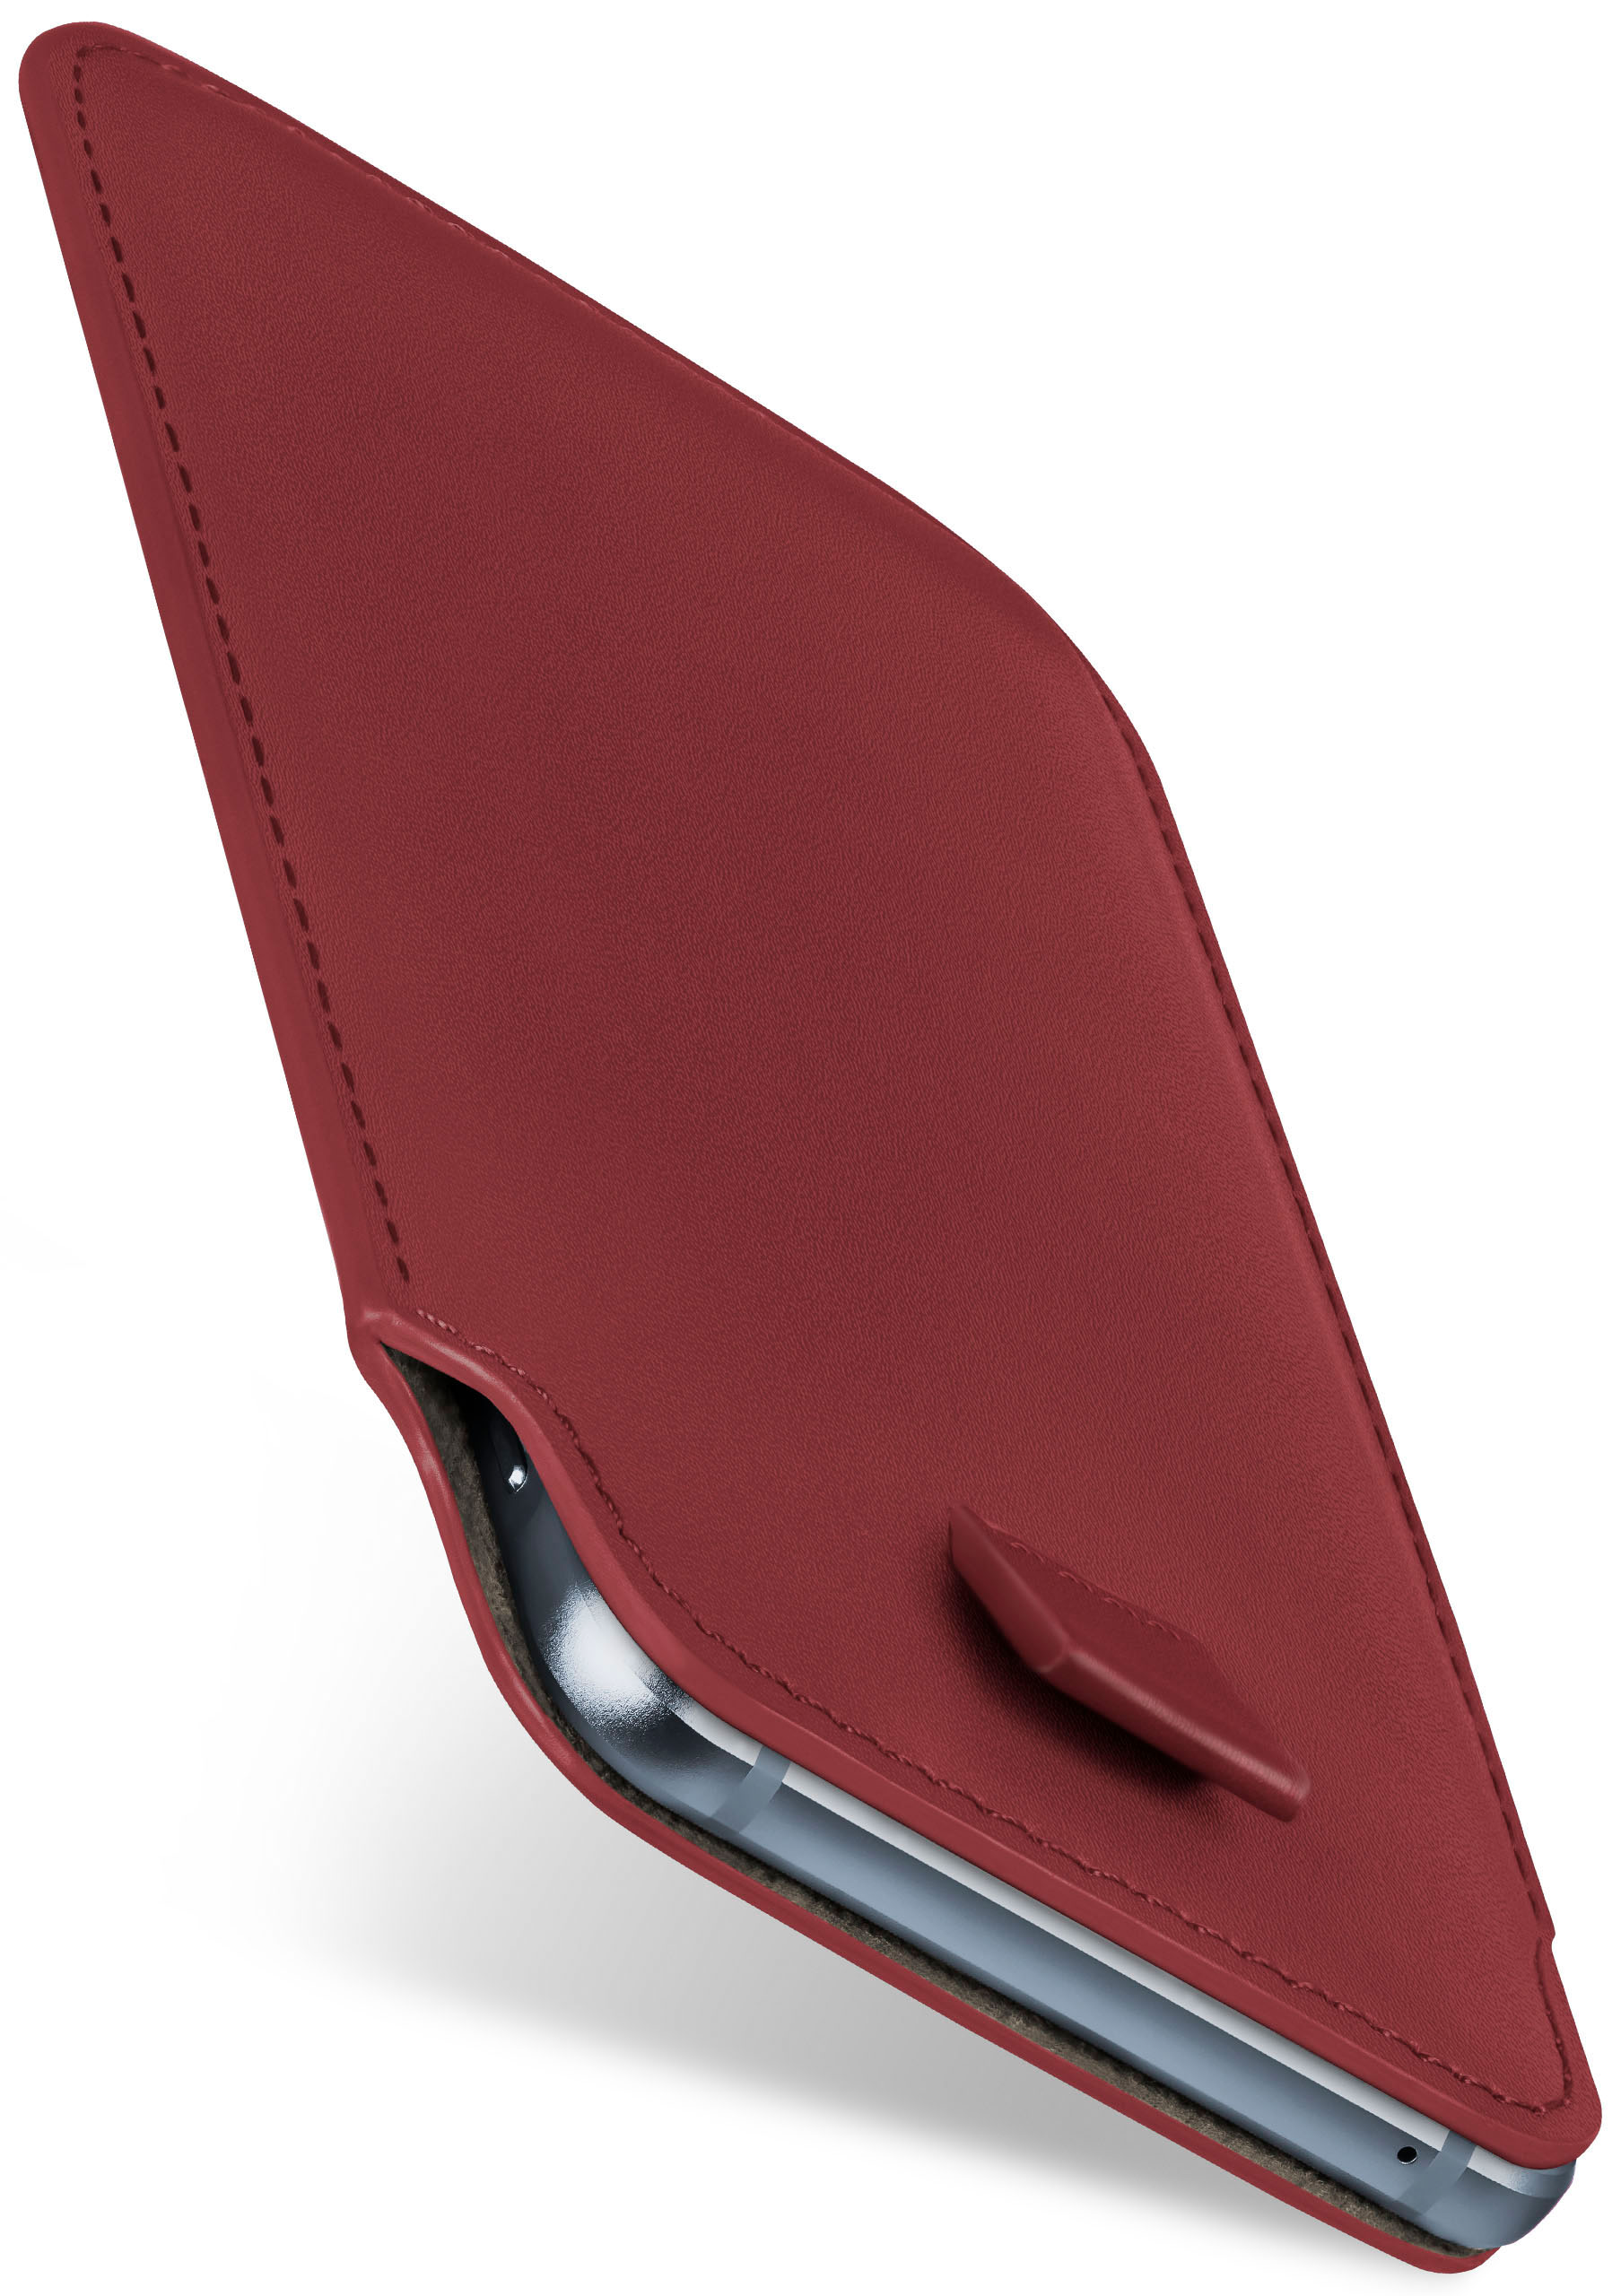 MOEX Slide Case, Full / Note 4X, Maroon-Red Redmi Xiaomi, Note 4 Cover